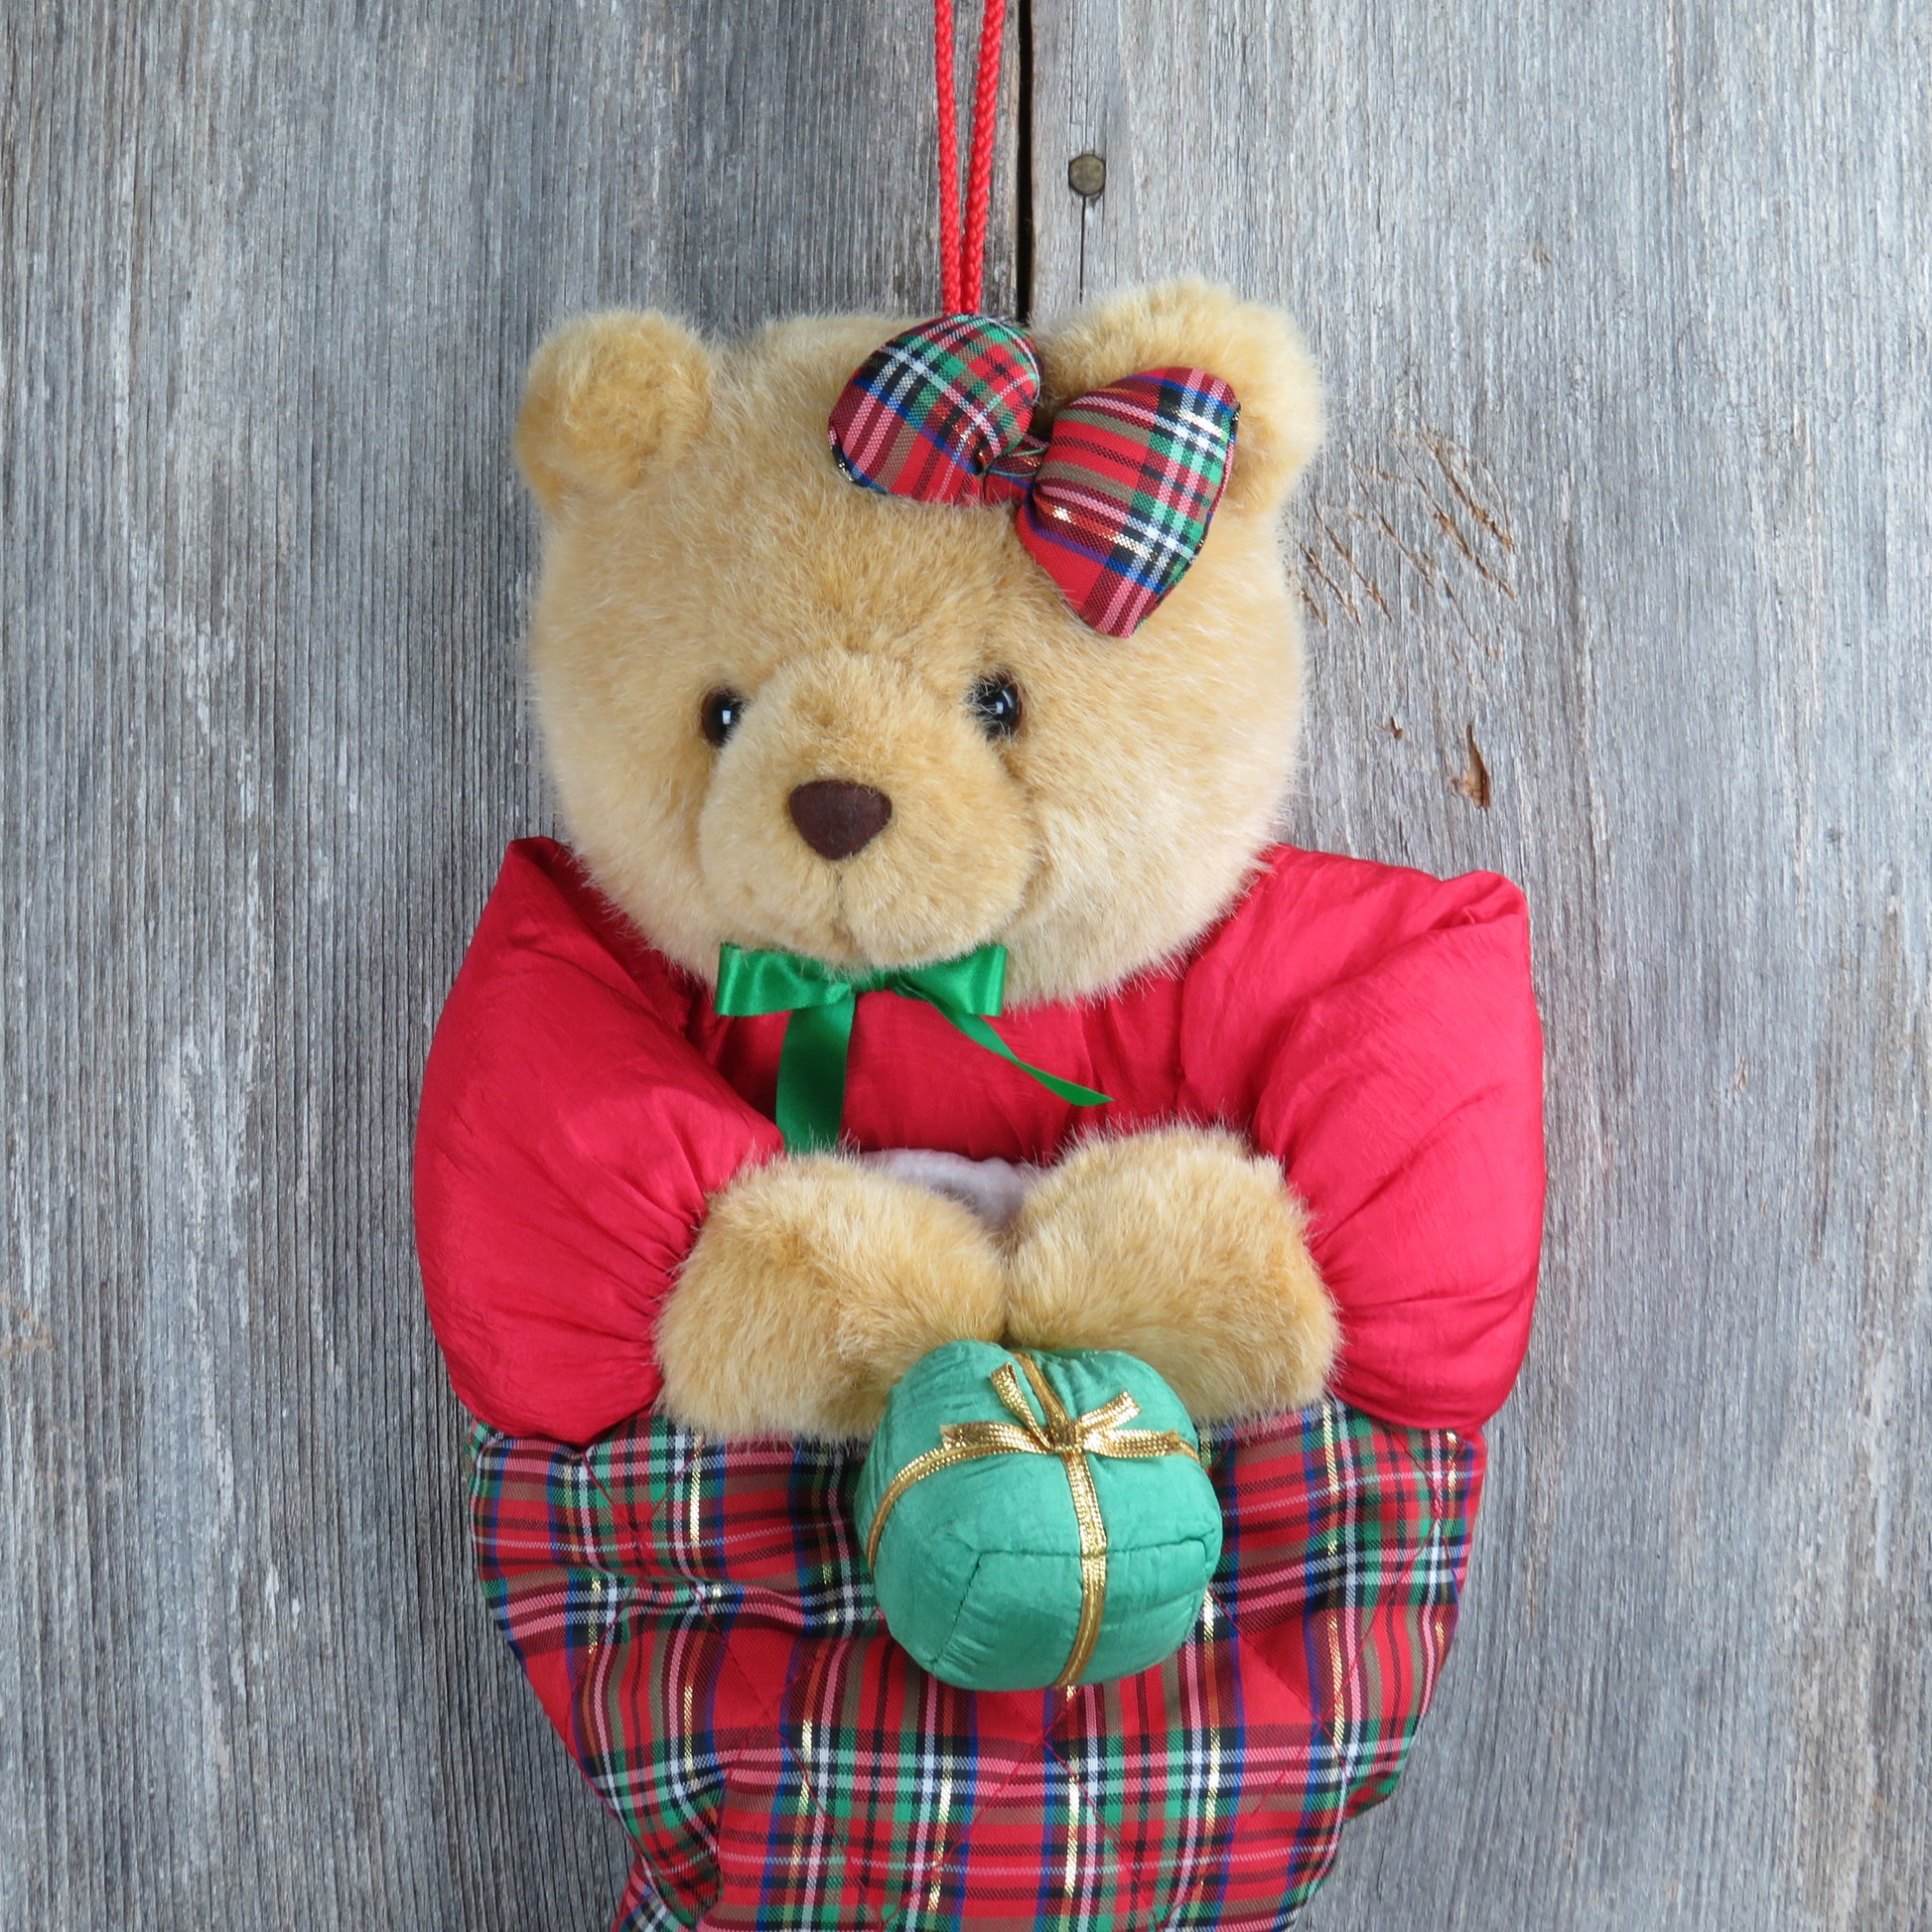 Vintage Teddy Bear Plush Christmas Stocking Plaid Gift Bow Red Green Gold - At Grandma's Table